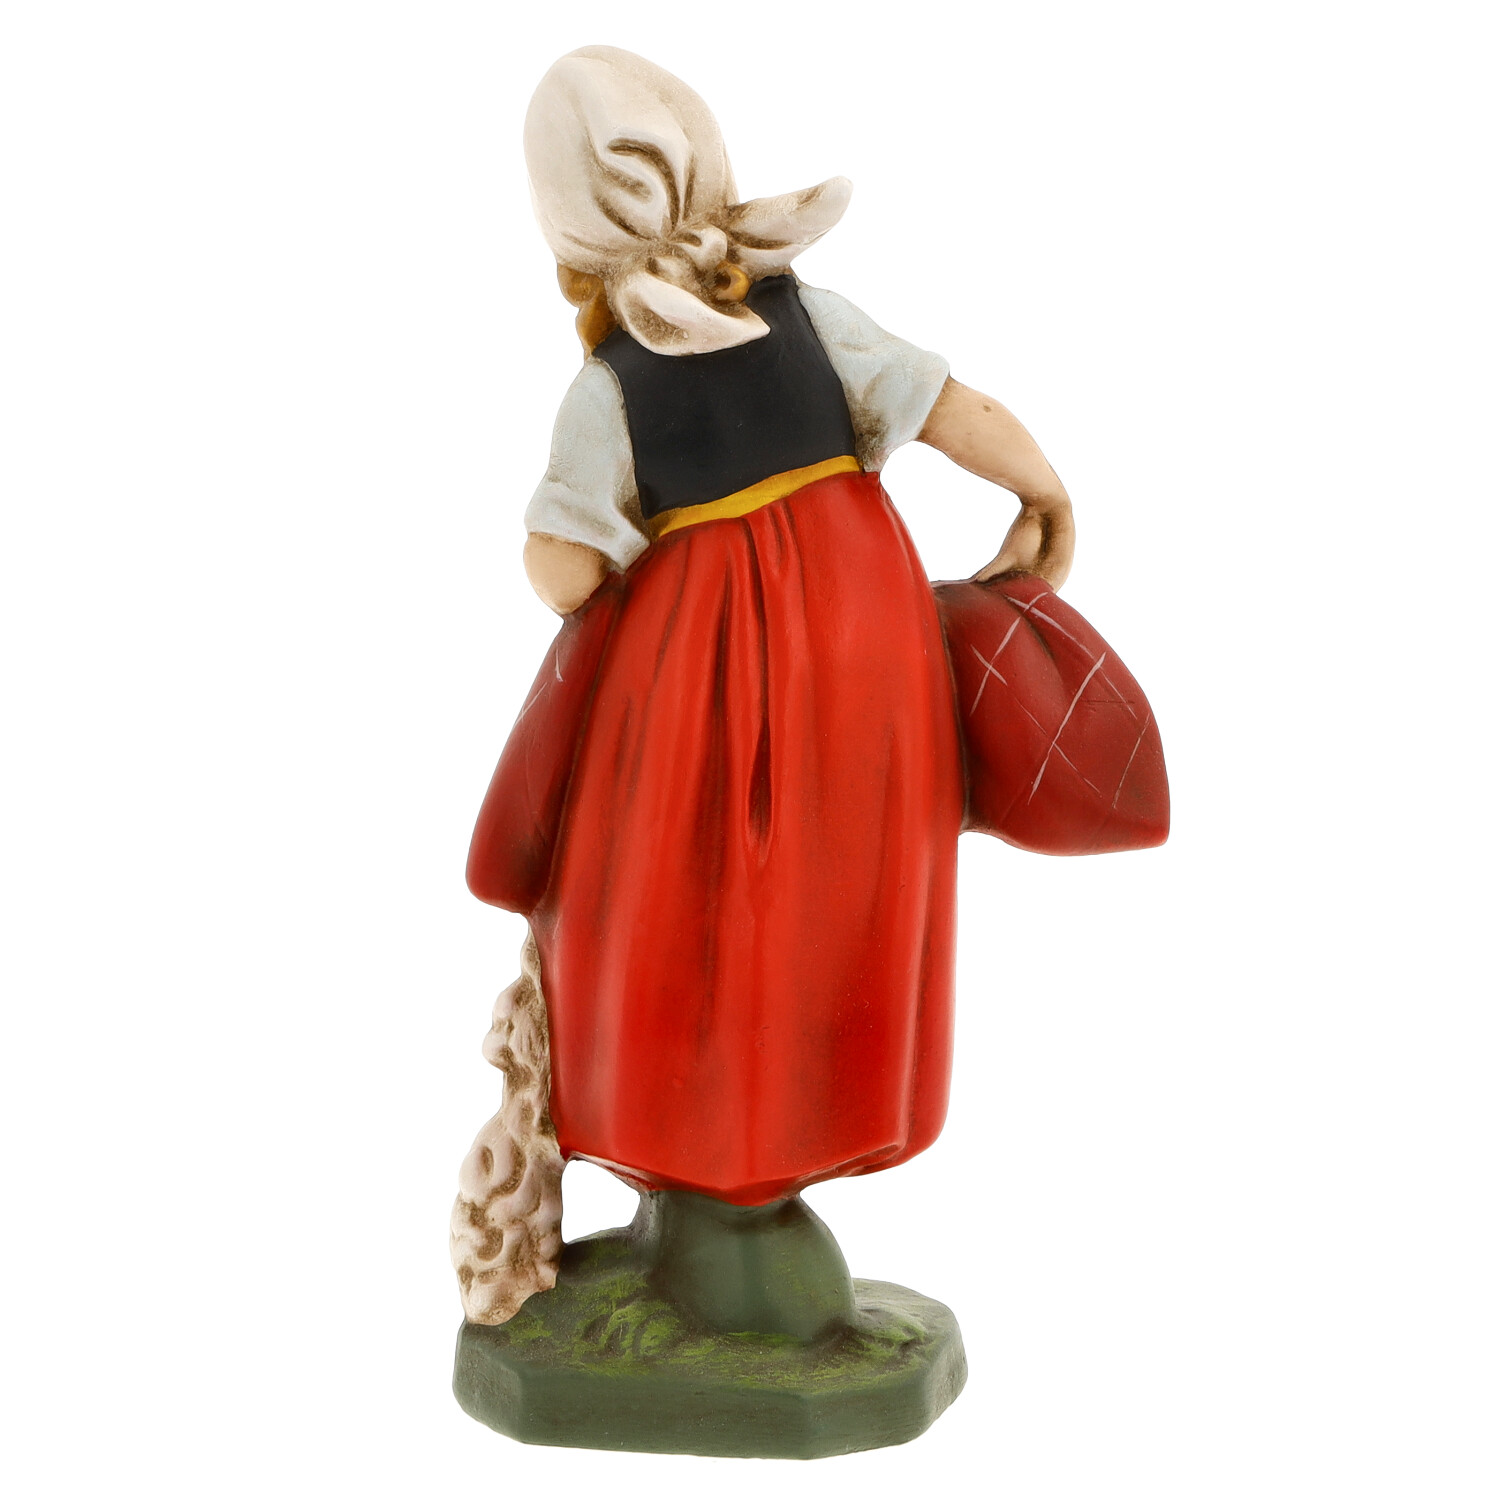 Goldmarie aus Frau Holle - Märchenfigur Marolin Papiermaché - made in GHermany - Gebrüder Grimm